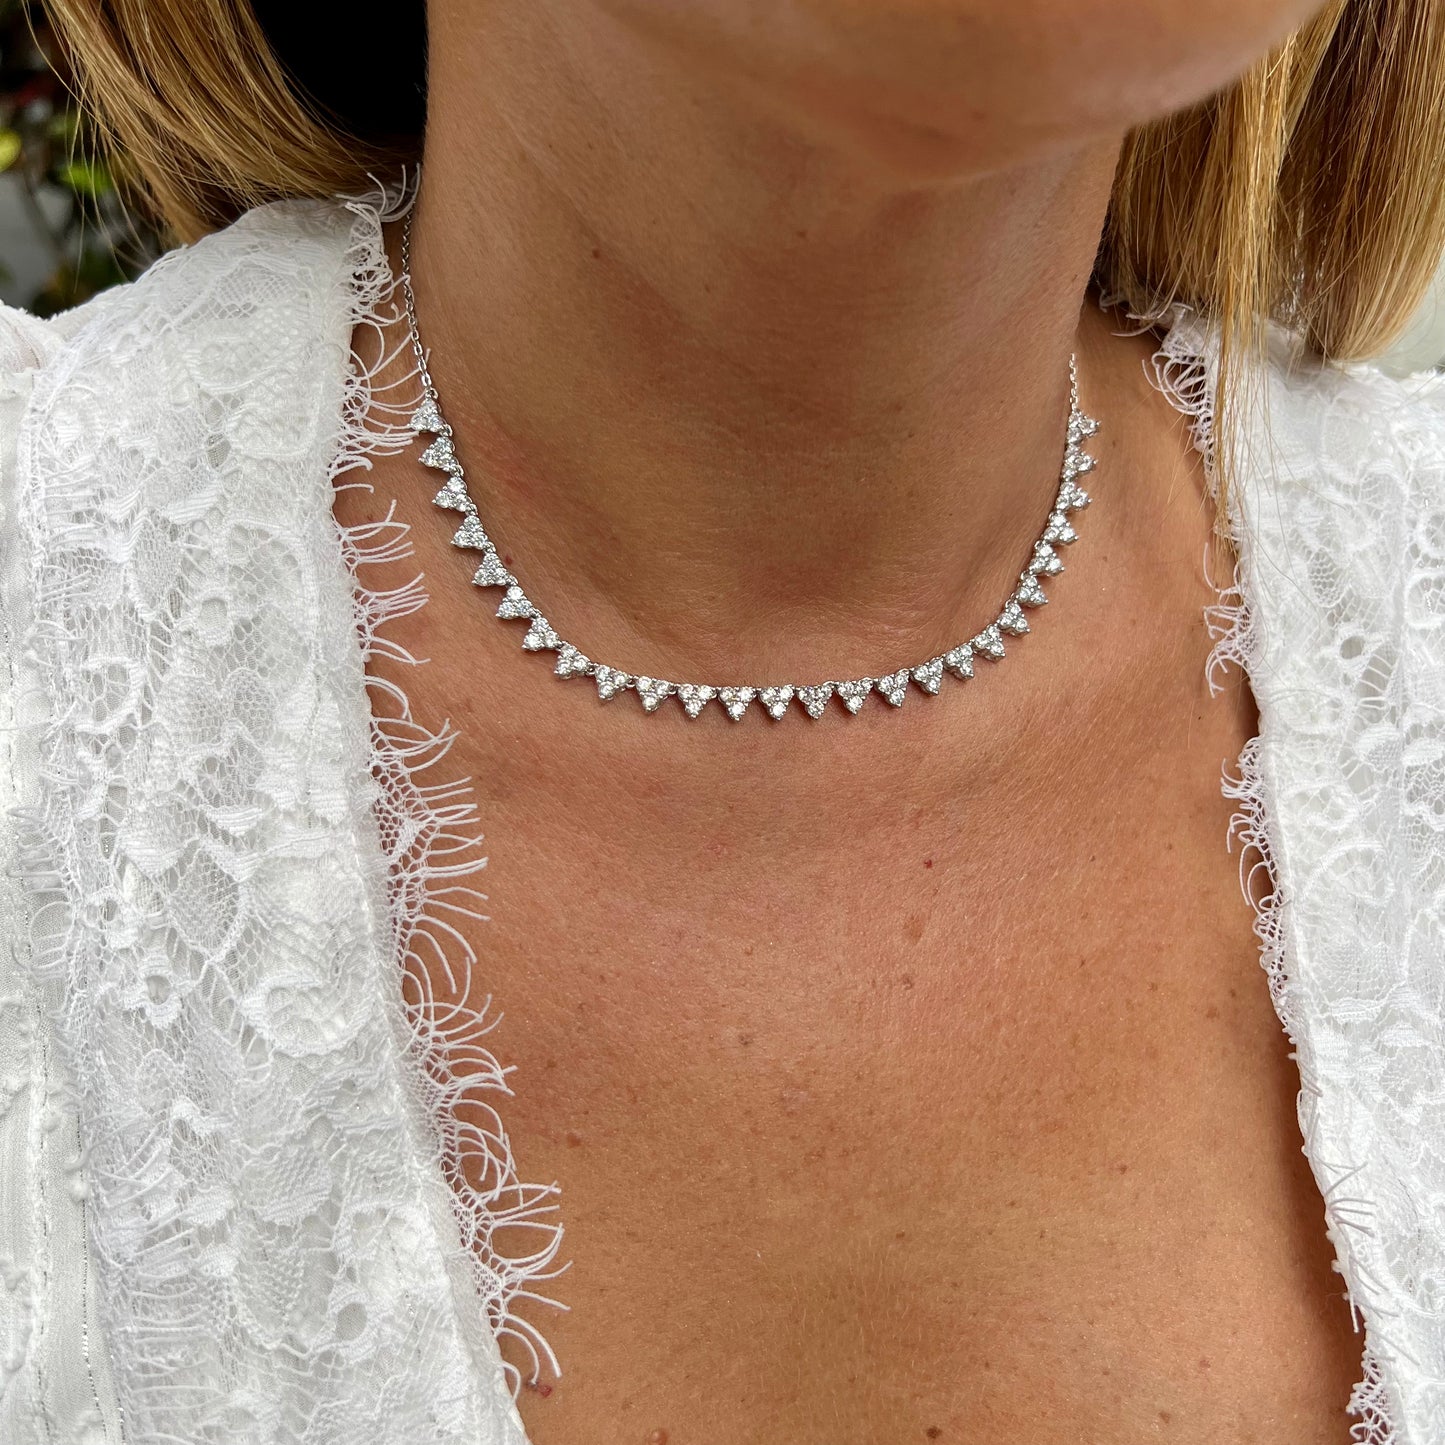 Skylar Necklace in Sterling Silver 925